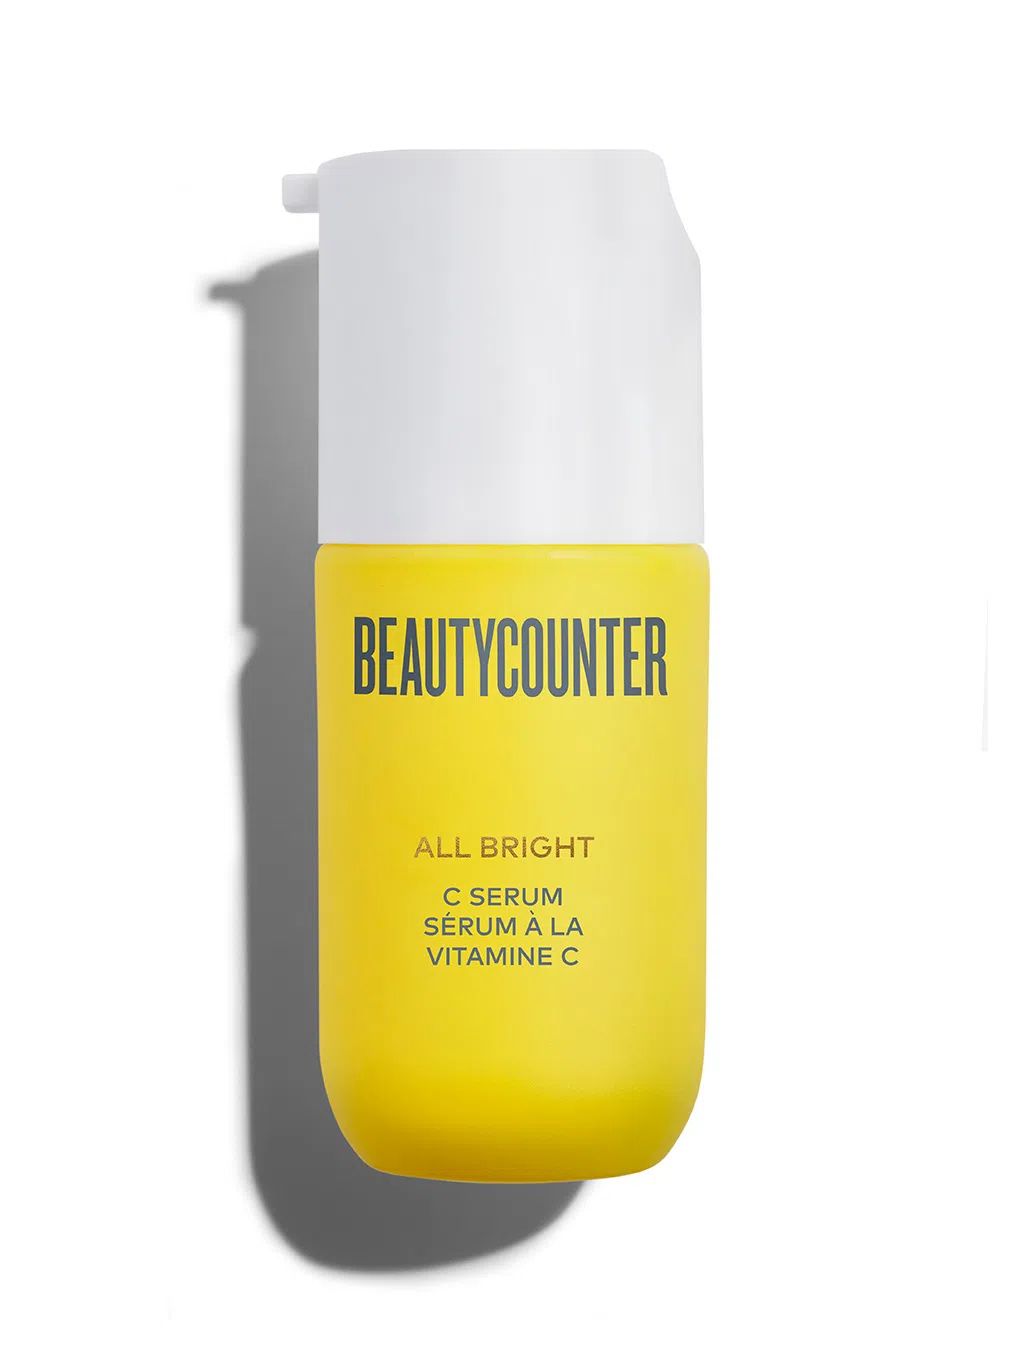 All Bright C Serum | Beautycounter.com